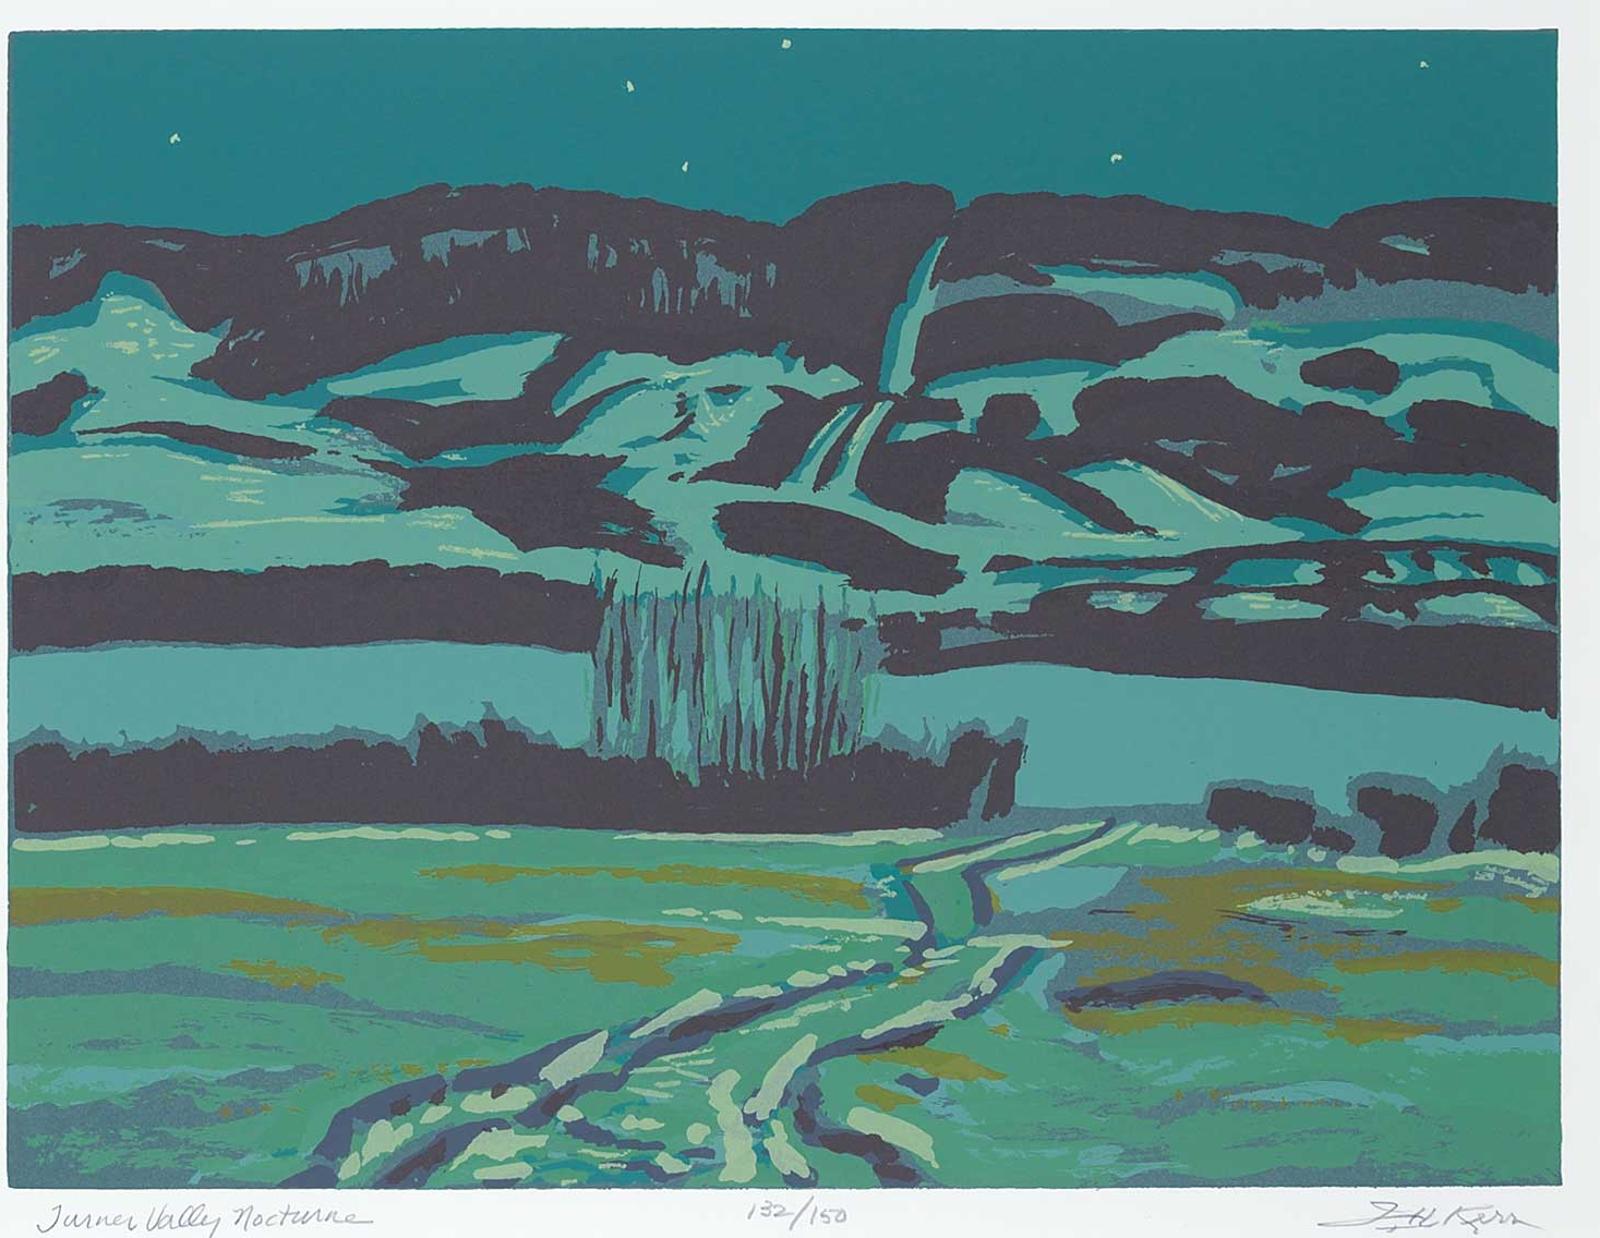 Illingworth Holey (Buck) Kerr (1905-1989) - Turner Valley Nocturne  #32/150